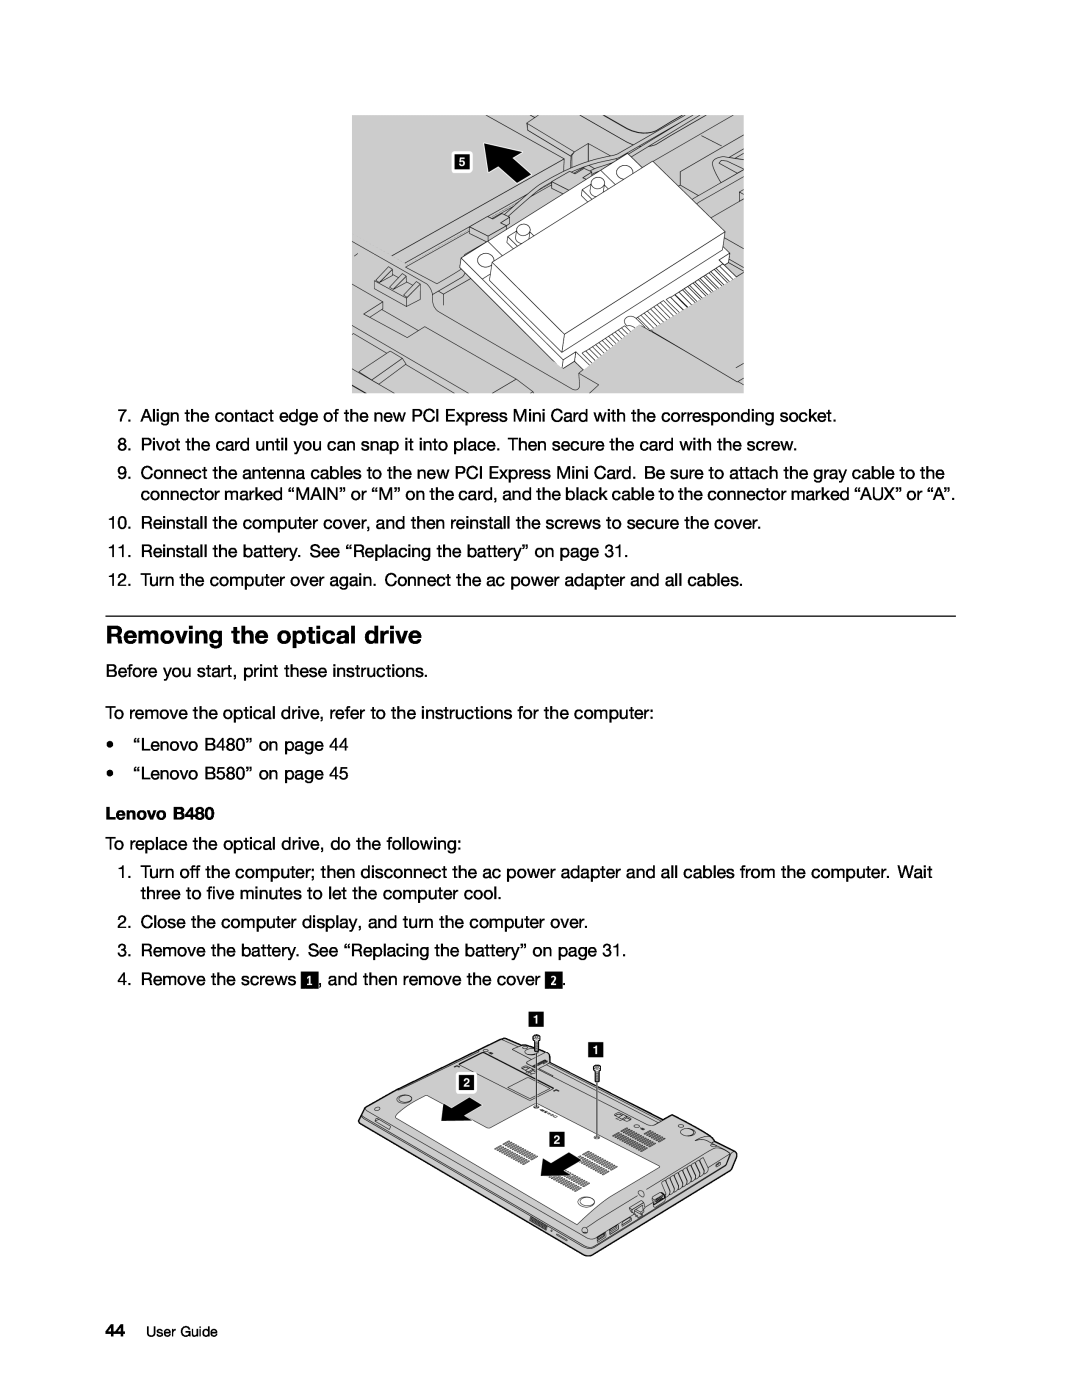 Lenovo B580 manual Removing the optical drive, Lenovo B480, User Guide 